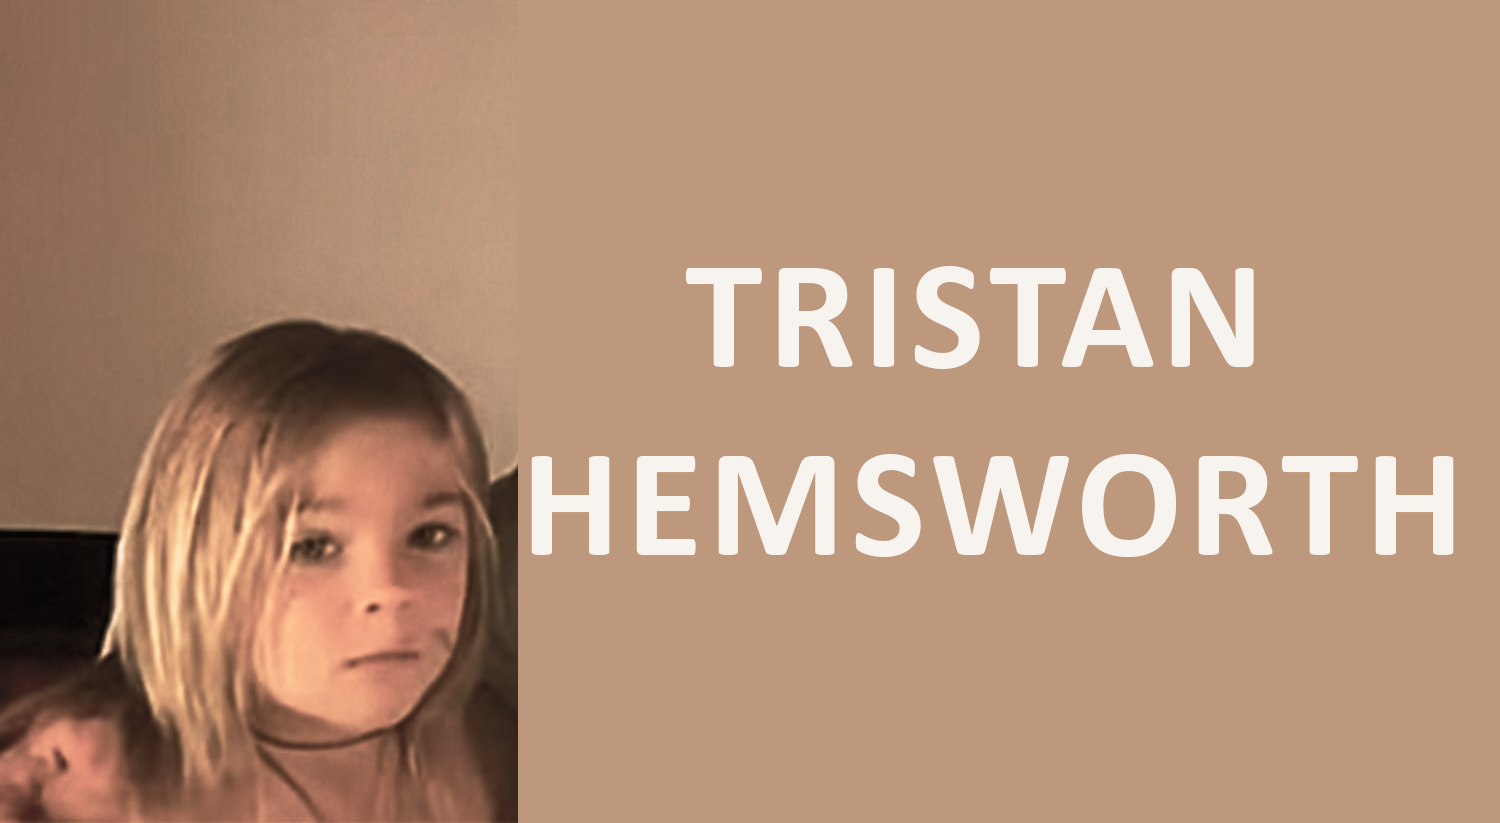 Tristan hemsworth